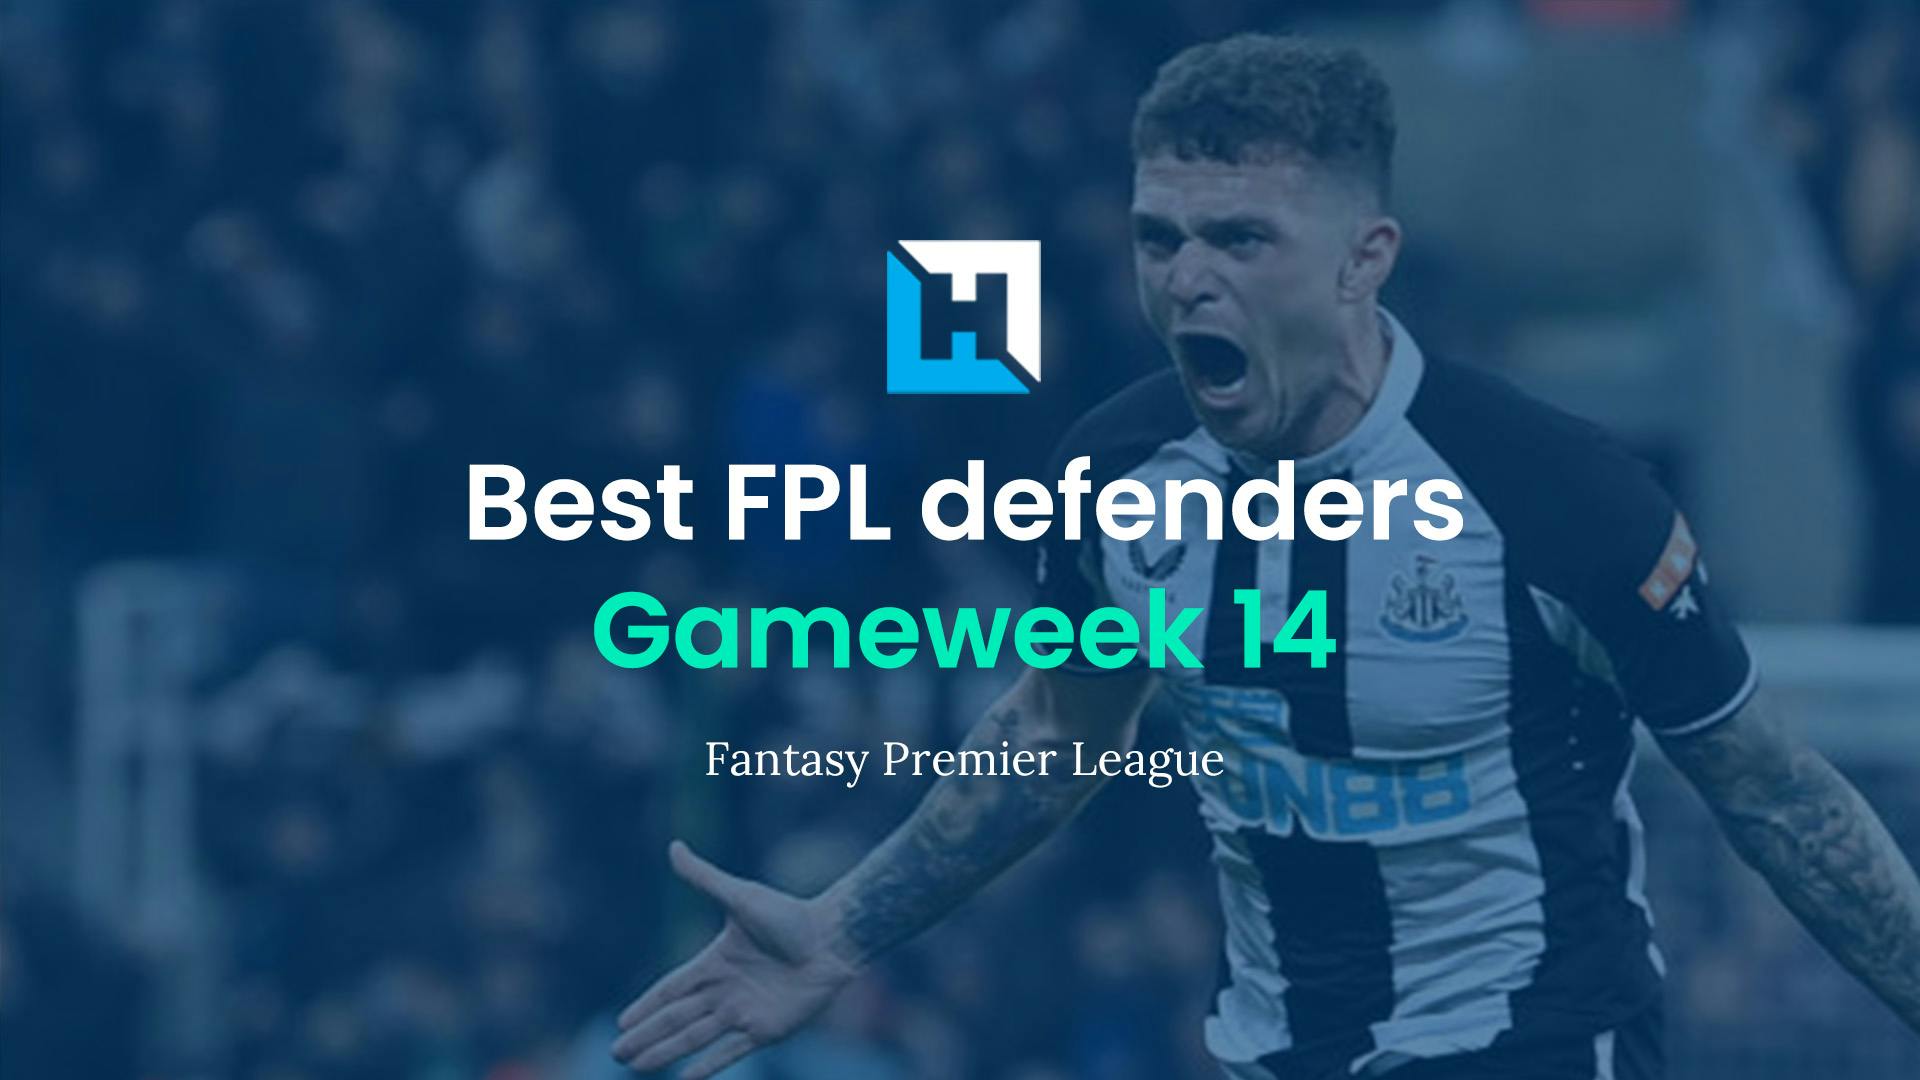 Best FPL players for Gameweek 14: Top 5 best defenders